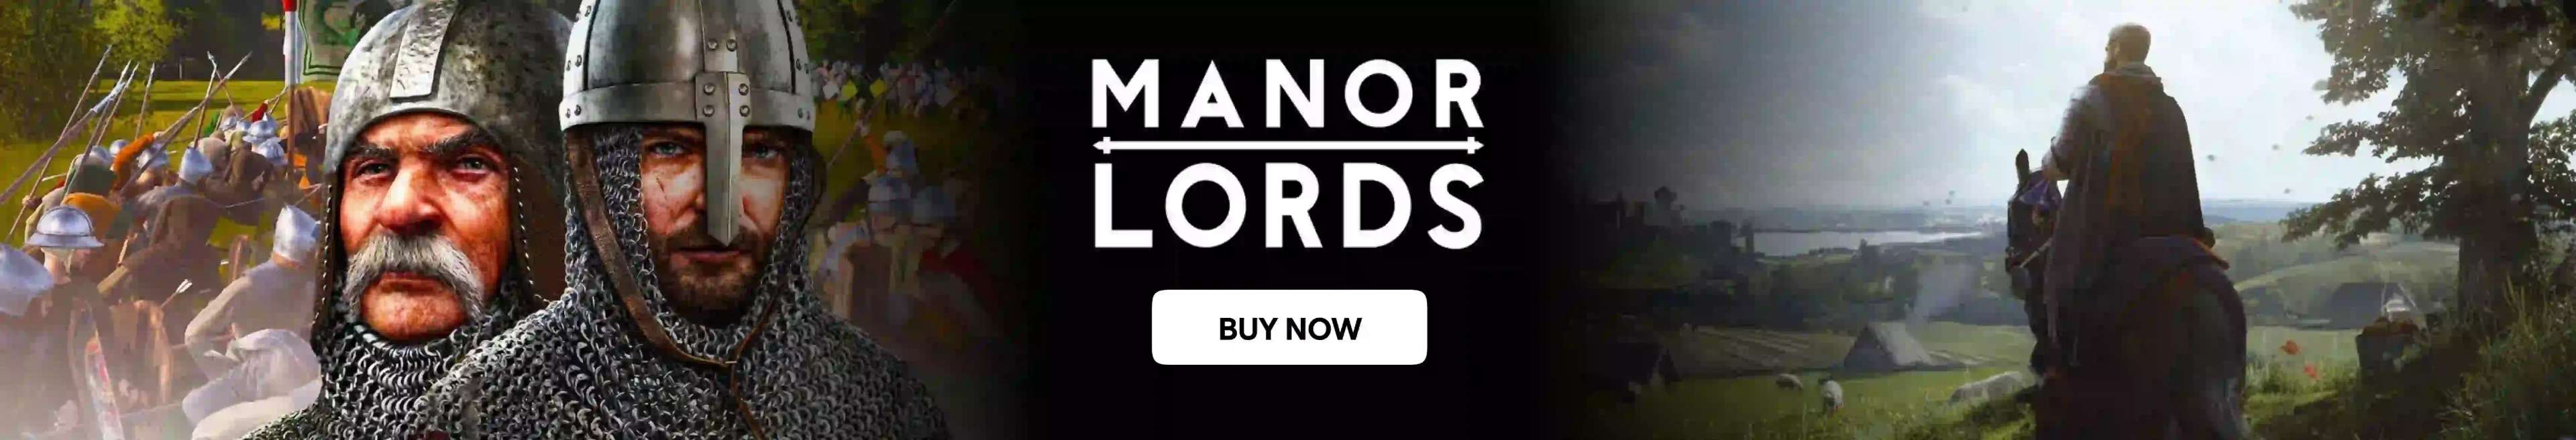 Manor lords web